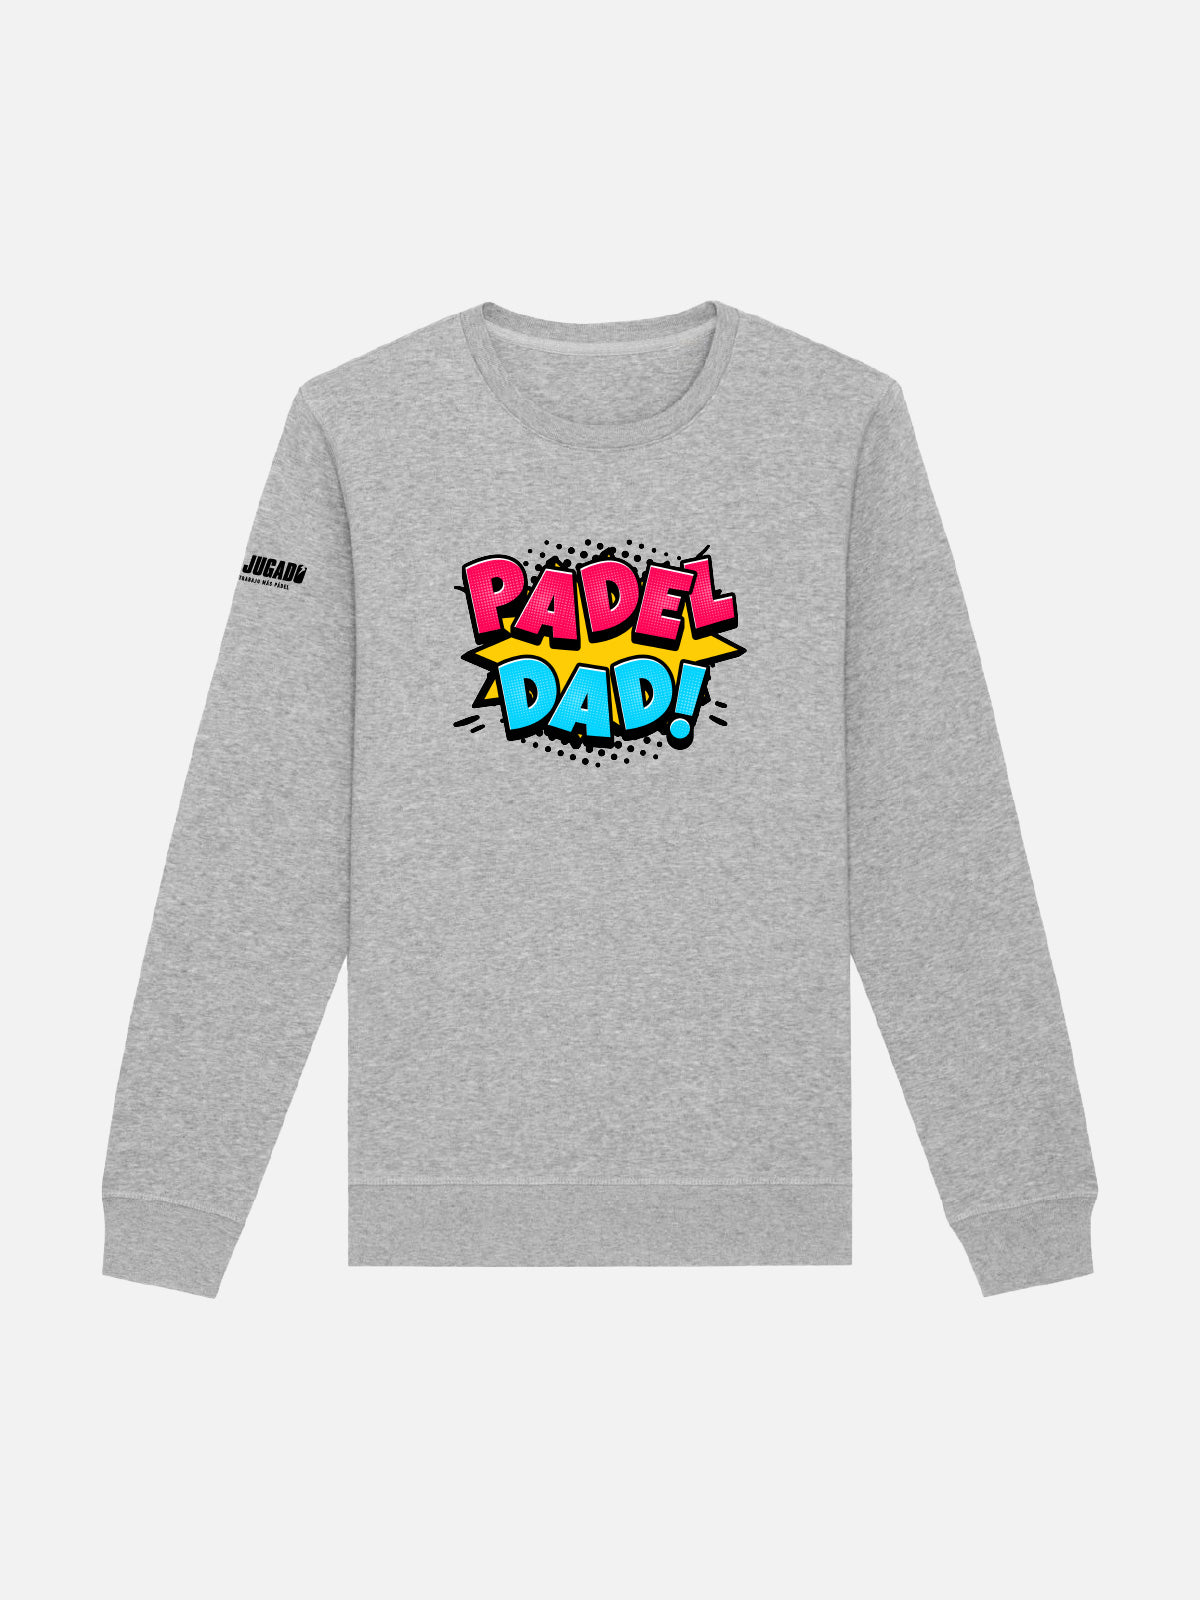 Fun Unisex Sweatshirt - Padel Dad